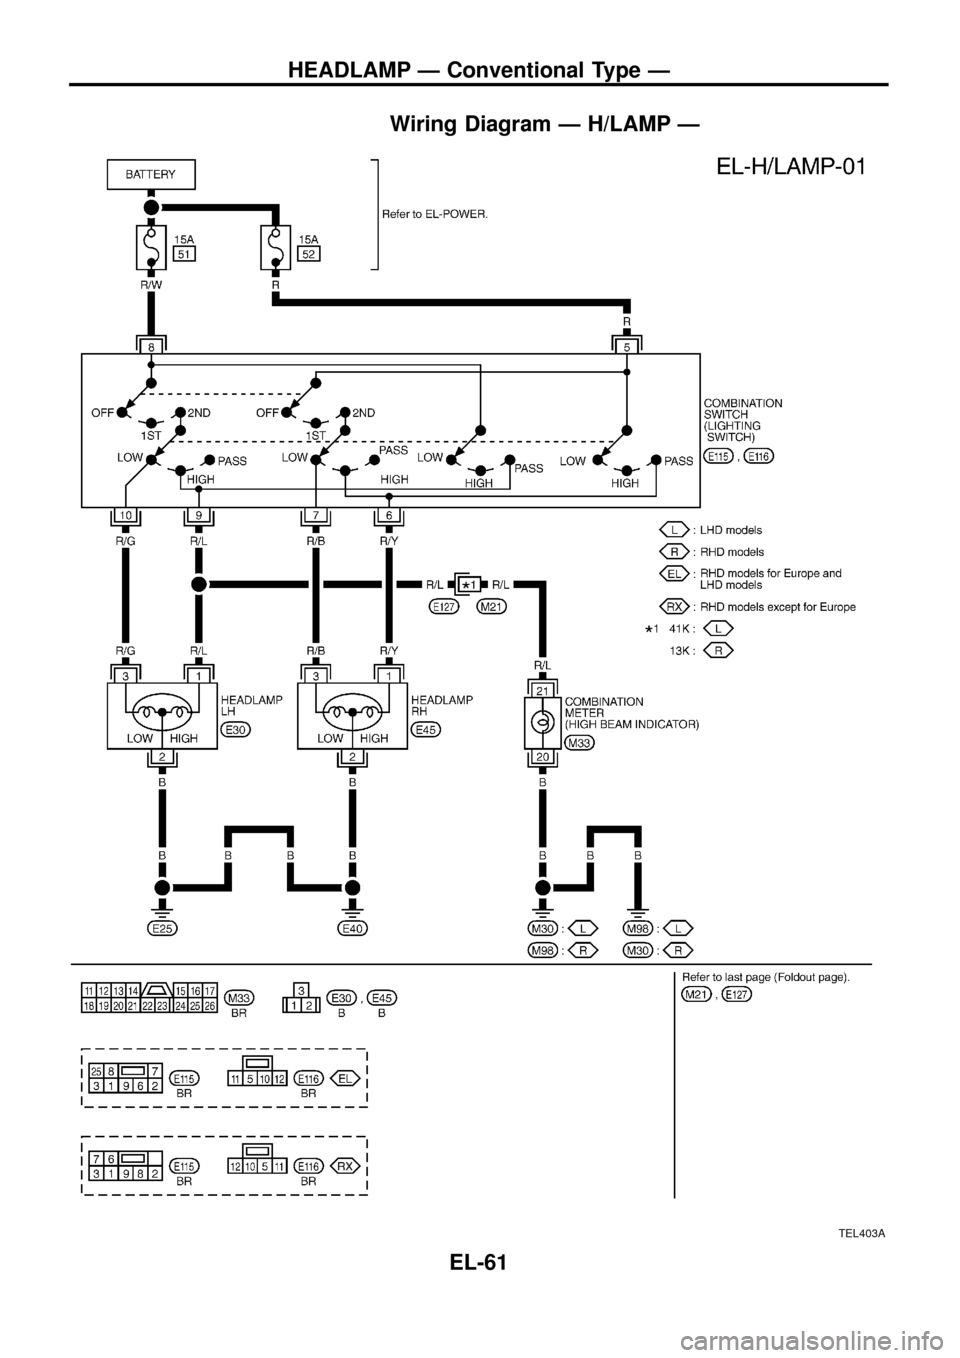 NISSAN PATROL 1998 Y61 / 5.G Electrical System Workshop Manual Wiring Diagram Ð H/LAMP Ð
TEL403A
HEADLAMP Ð Conventional Type Ð
EL-61 